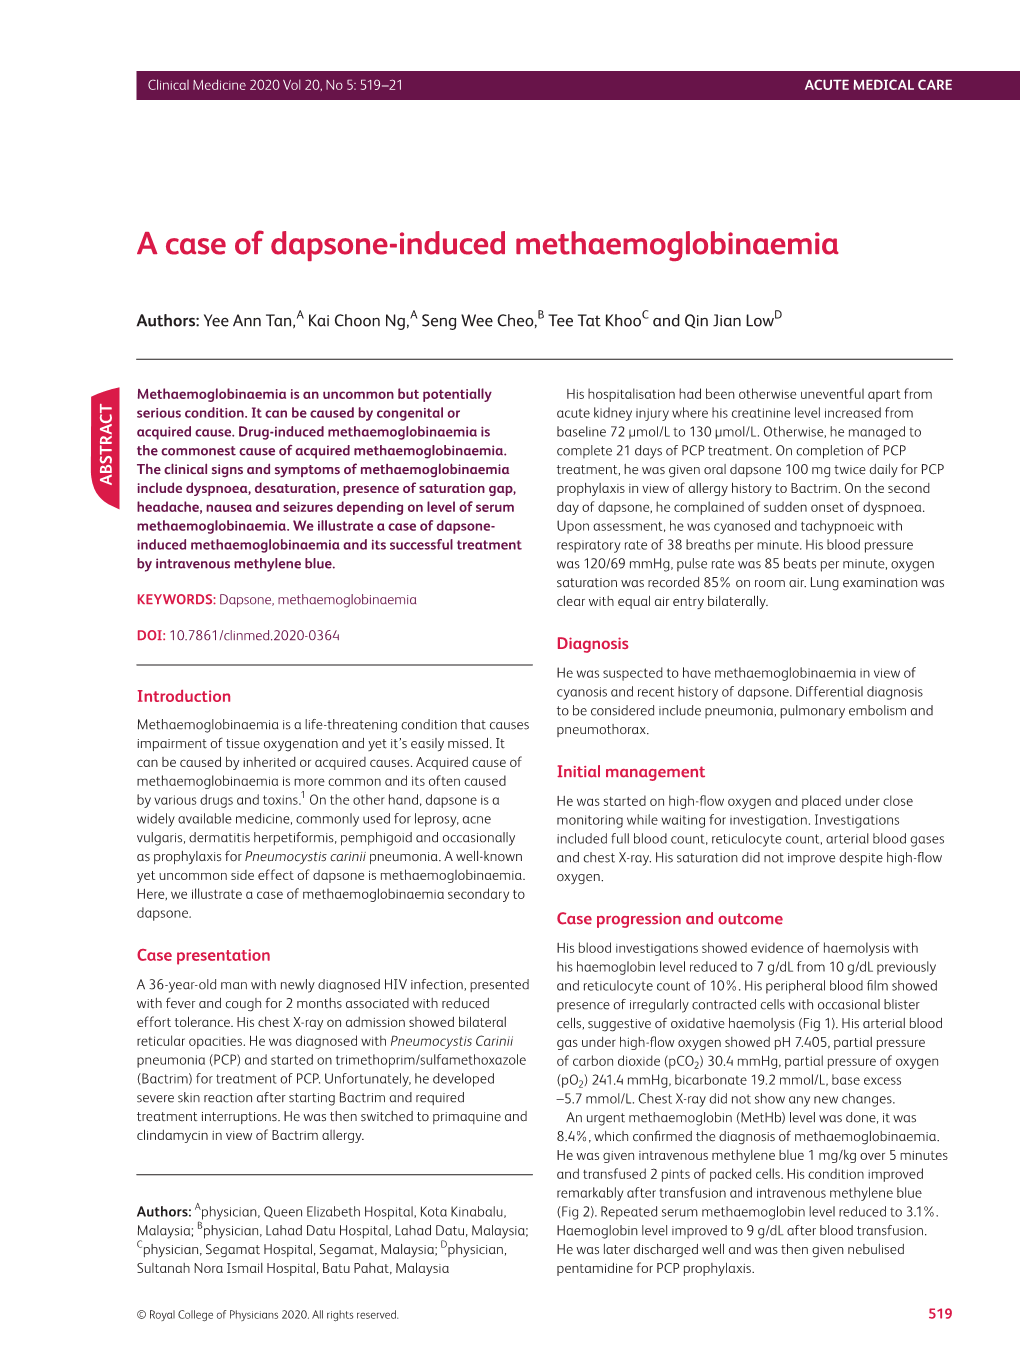 A Case of Dapsone-Induced Methaemoglobinaemia